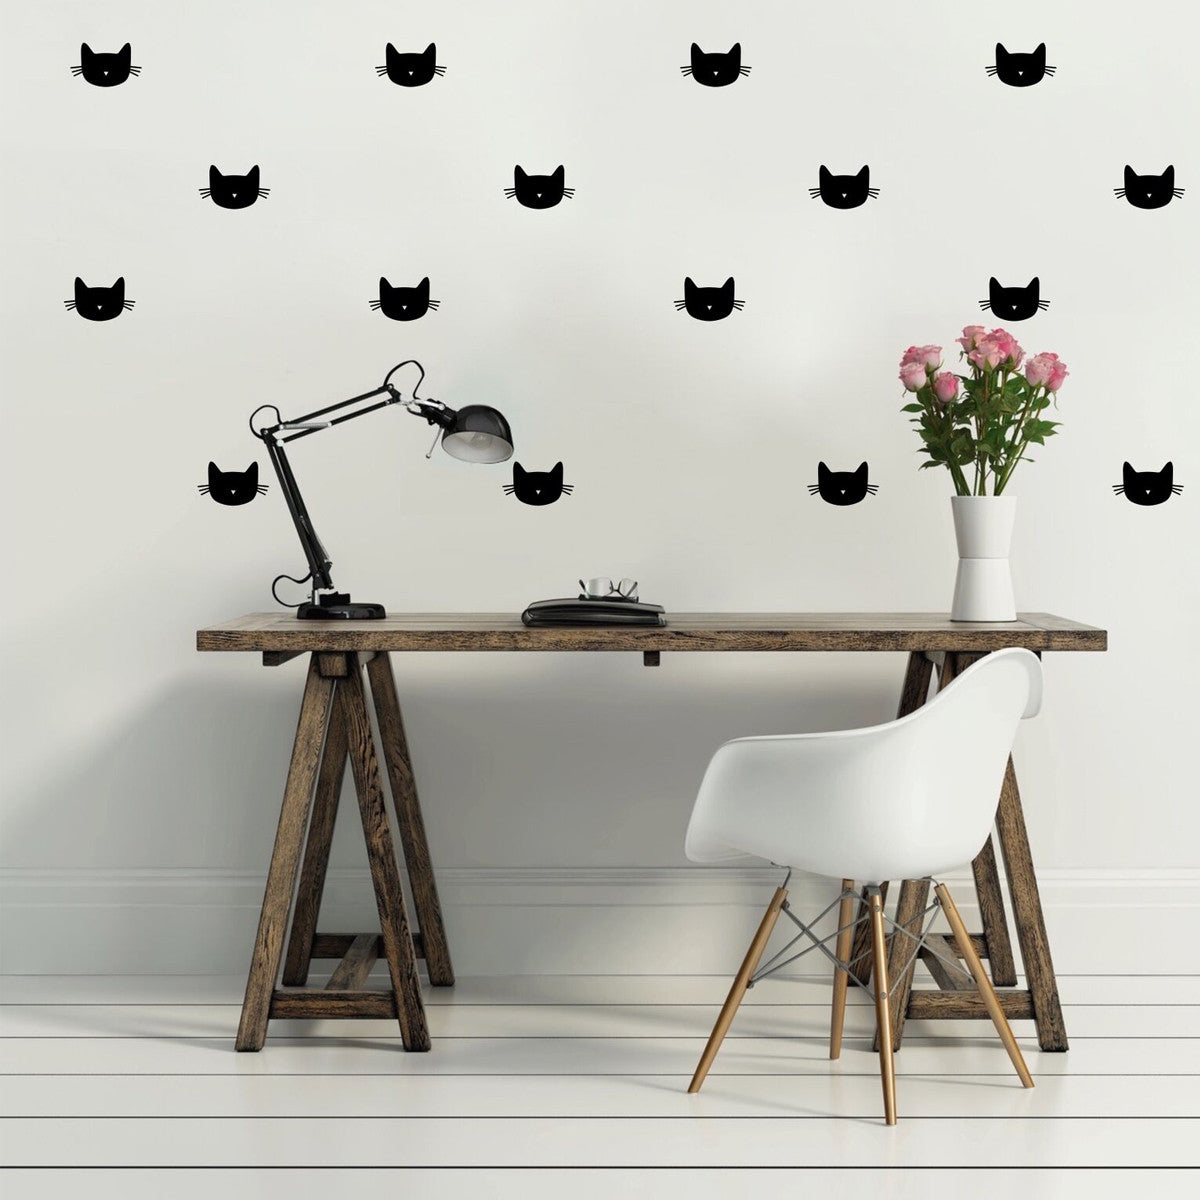 deer industries wall decor for kids bedroom wall stickers wall decals pom cat kitten black